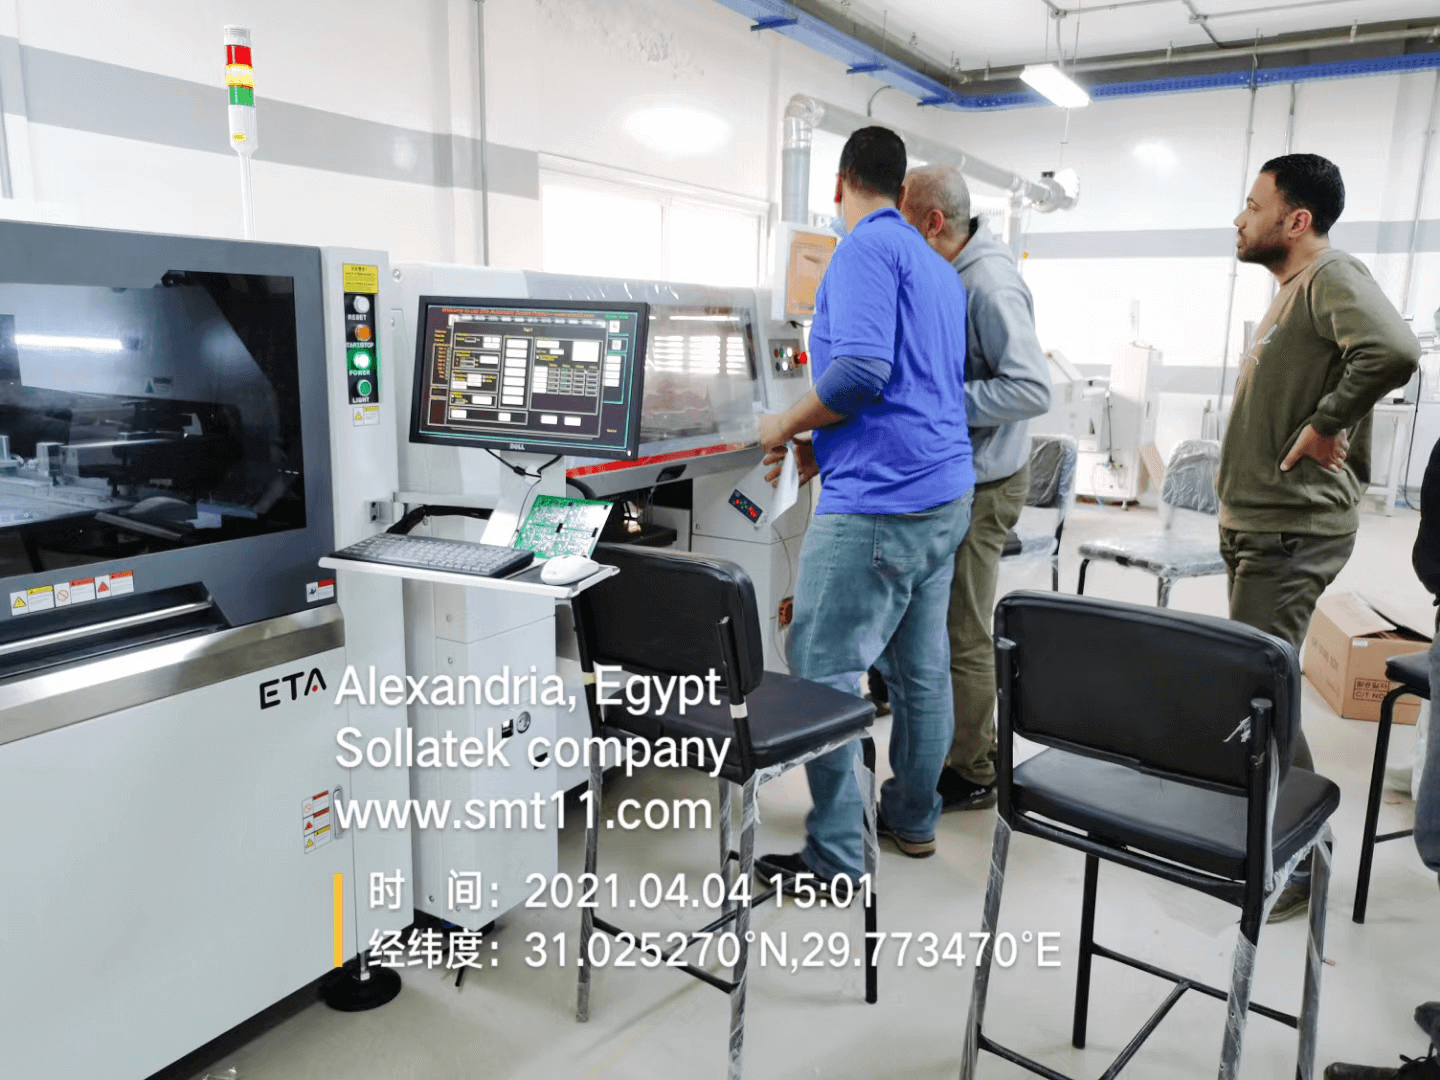 4 ETA Global Service in Egypt